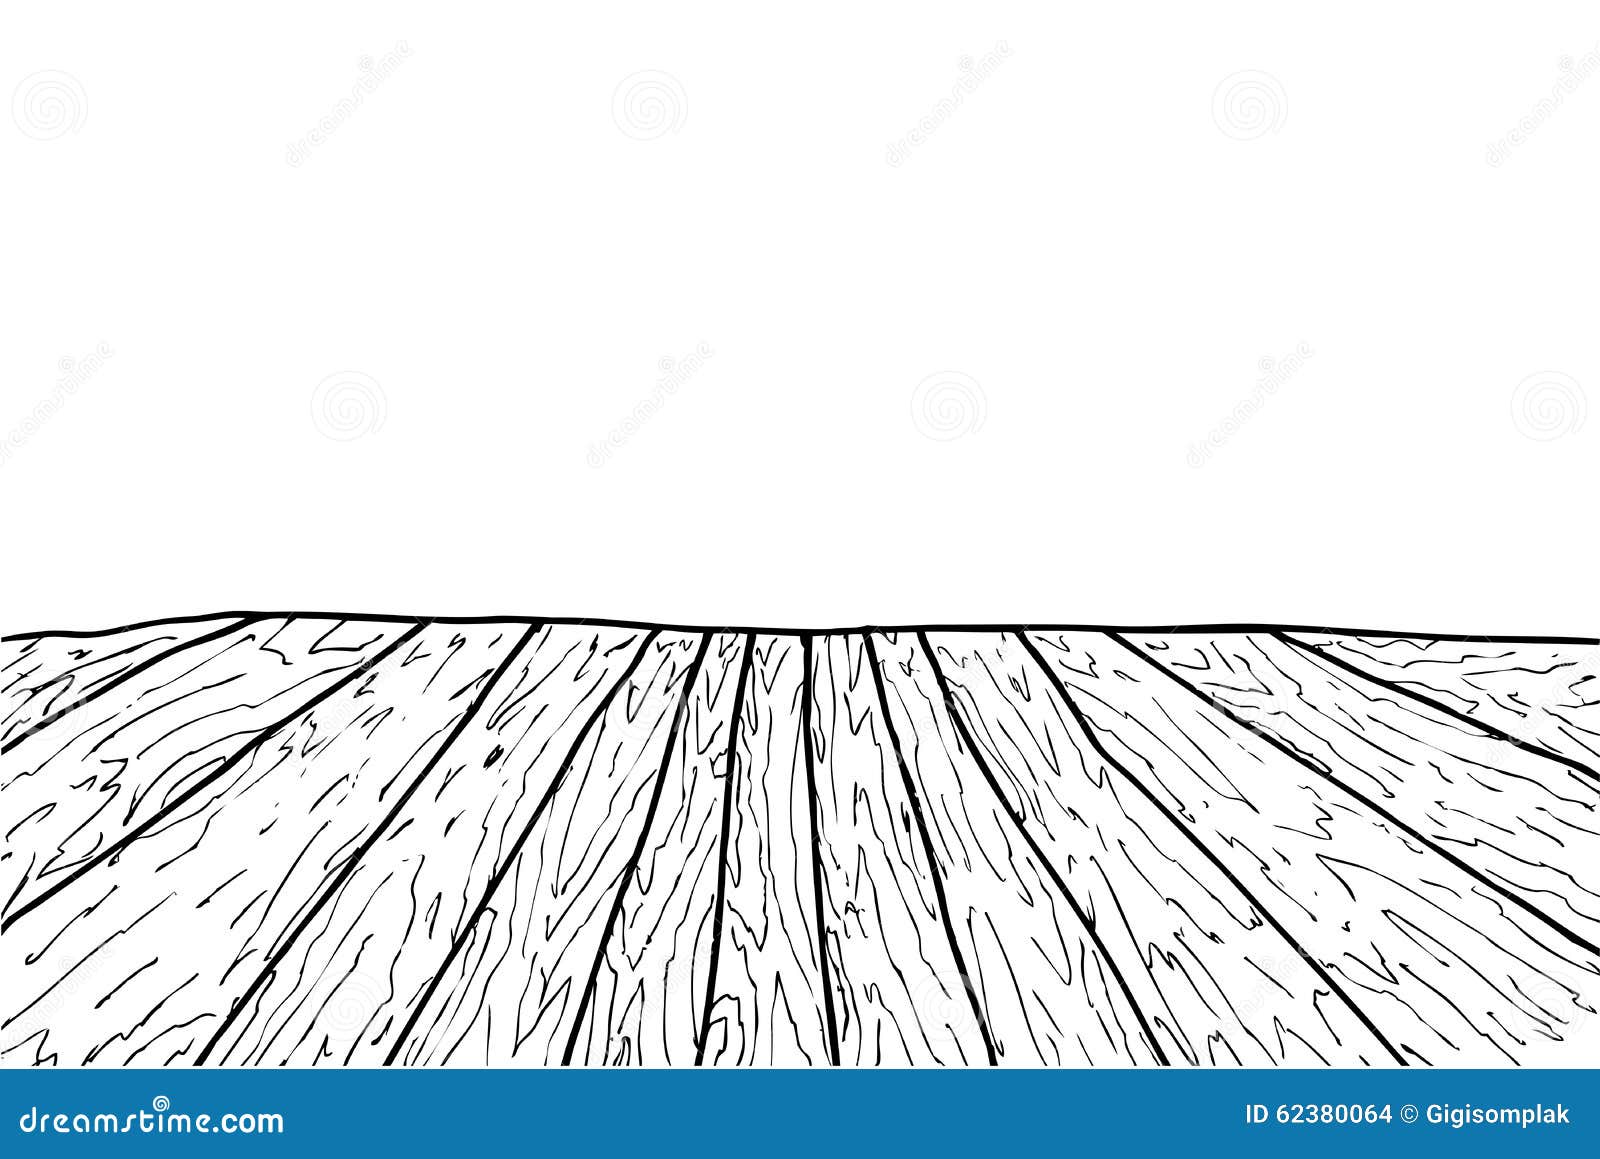 Hand Draw Sketch Of Wooden Floor Stock Vector Illustration of design, cracks 62380064